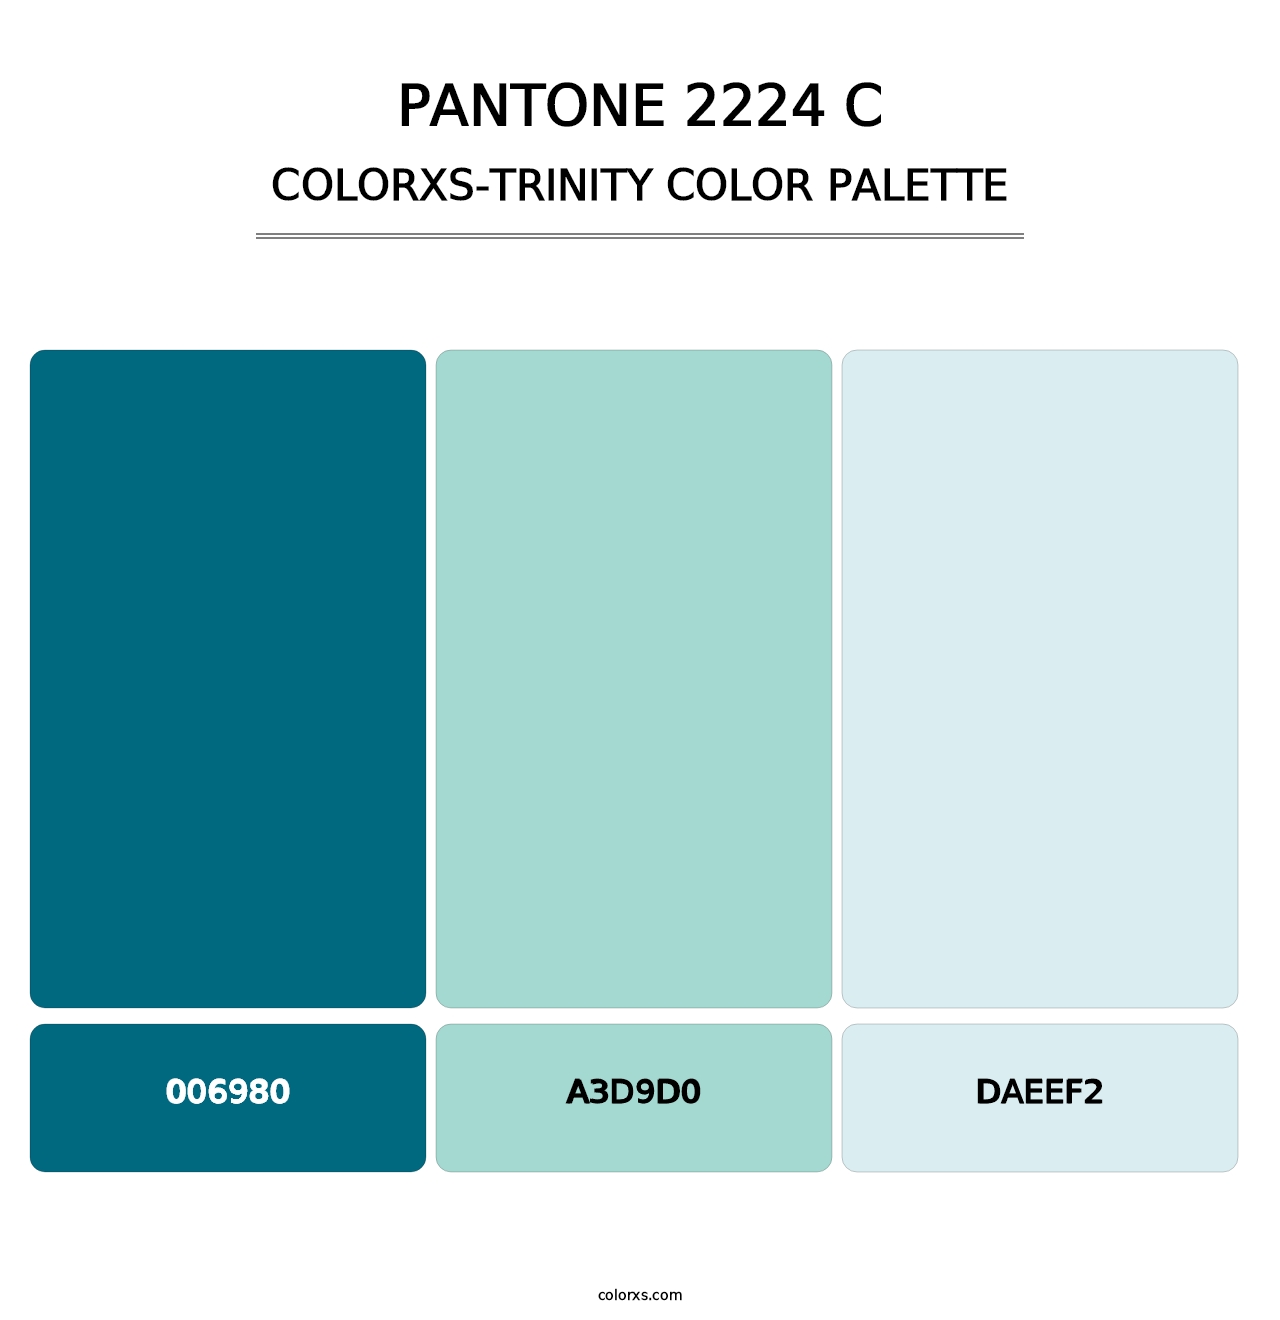 PANTONE 2224 C - Colorxs Trinity Palette